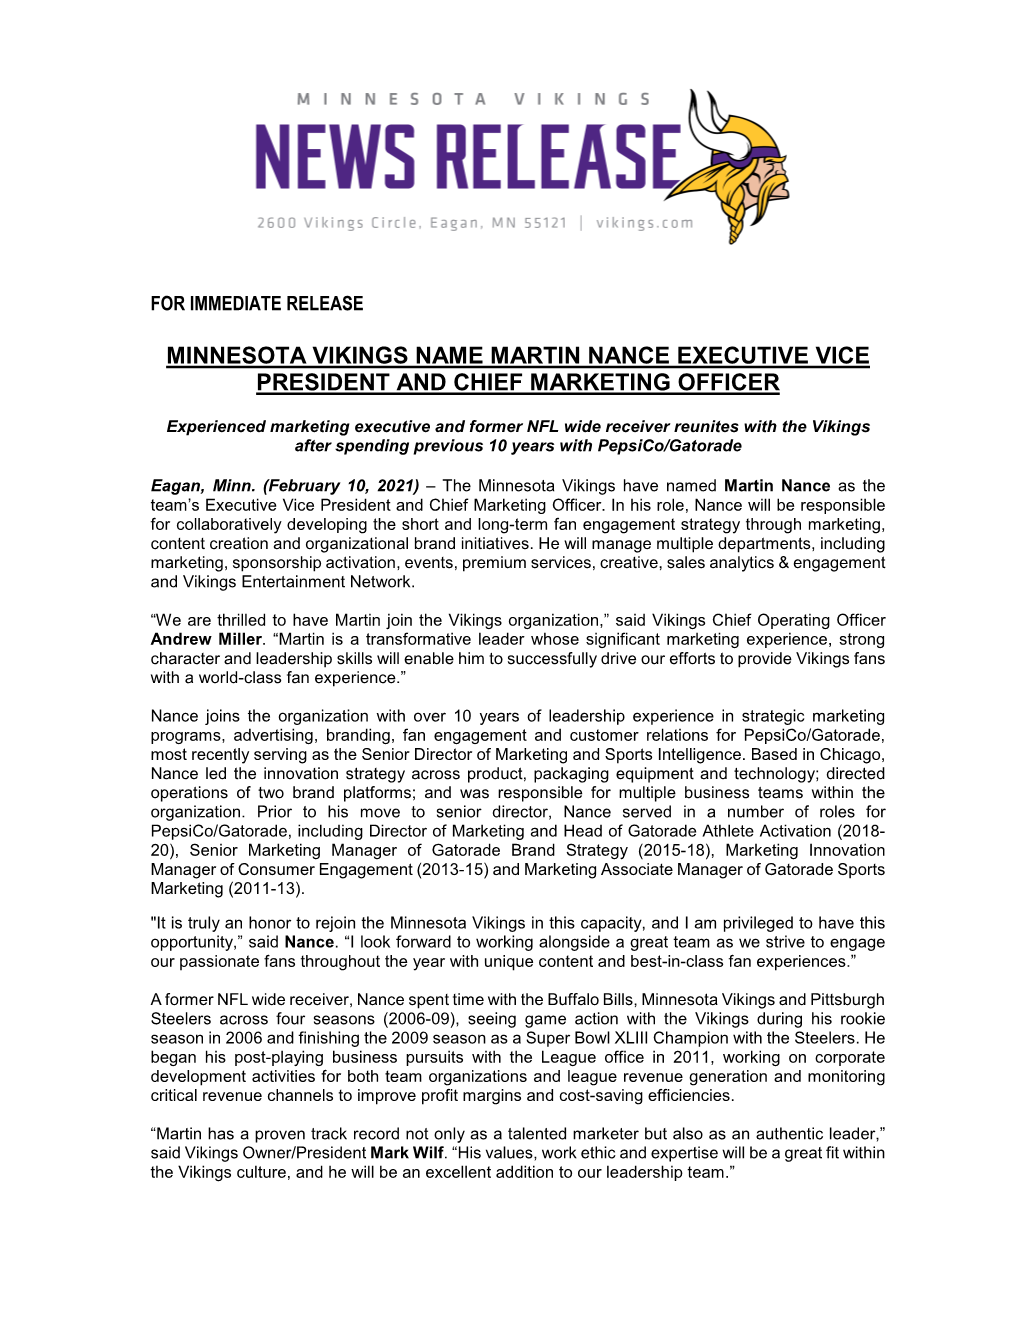 Minnesota Vikings Name Martin Nance Executive Vice President and Chief Marketing Officer